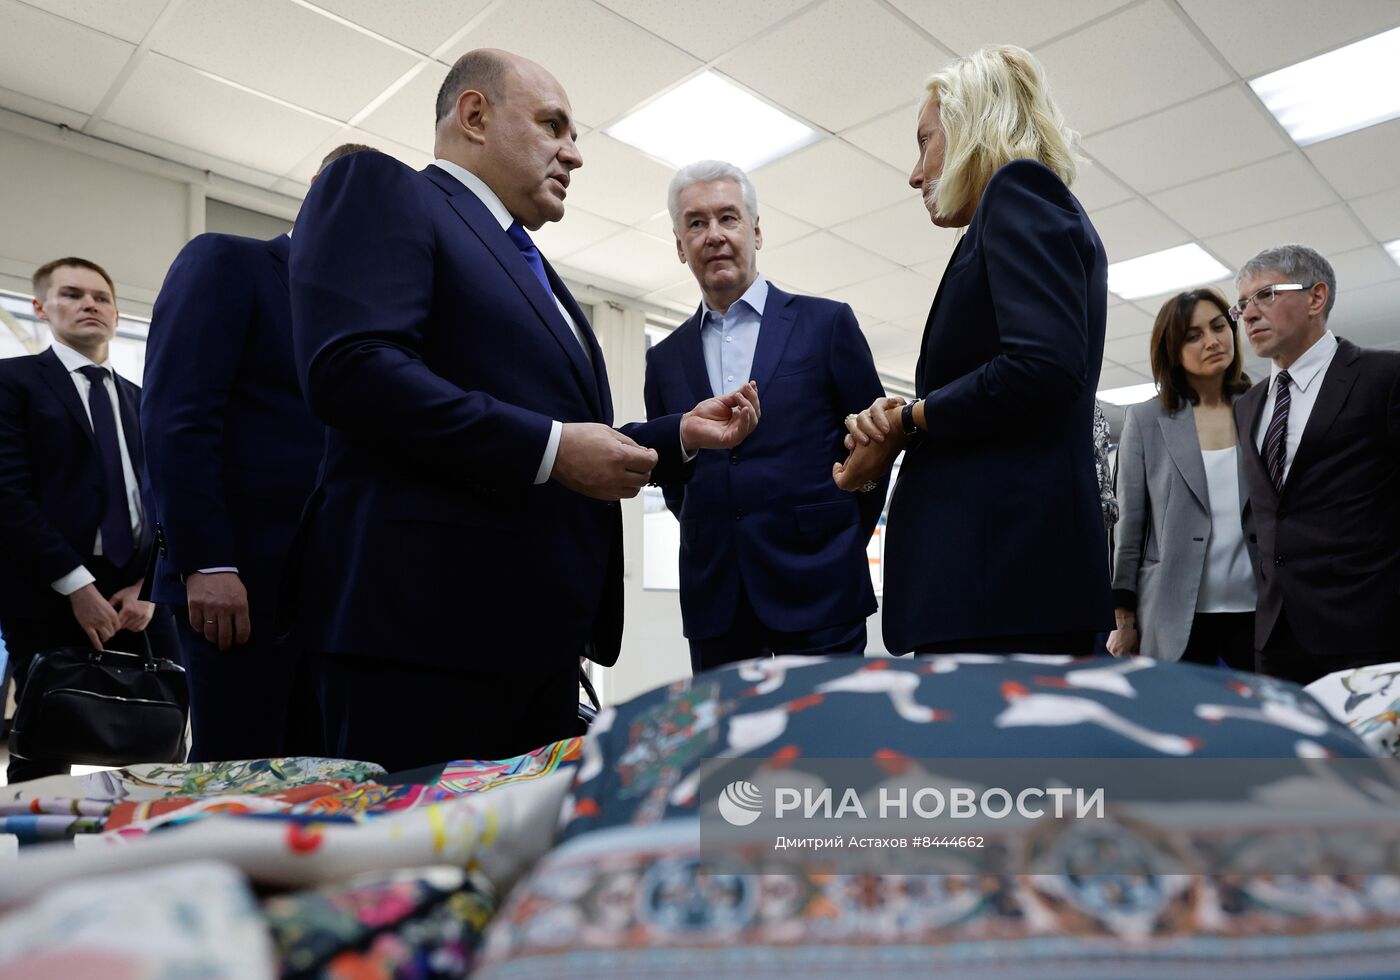 Премьер-министр РФ М. Мишустин посетил технопарк "Калибр"